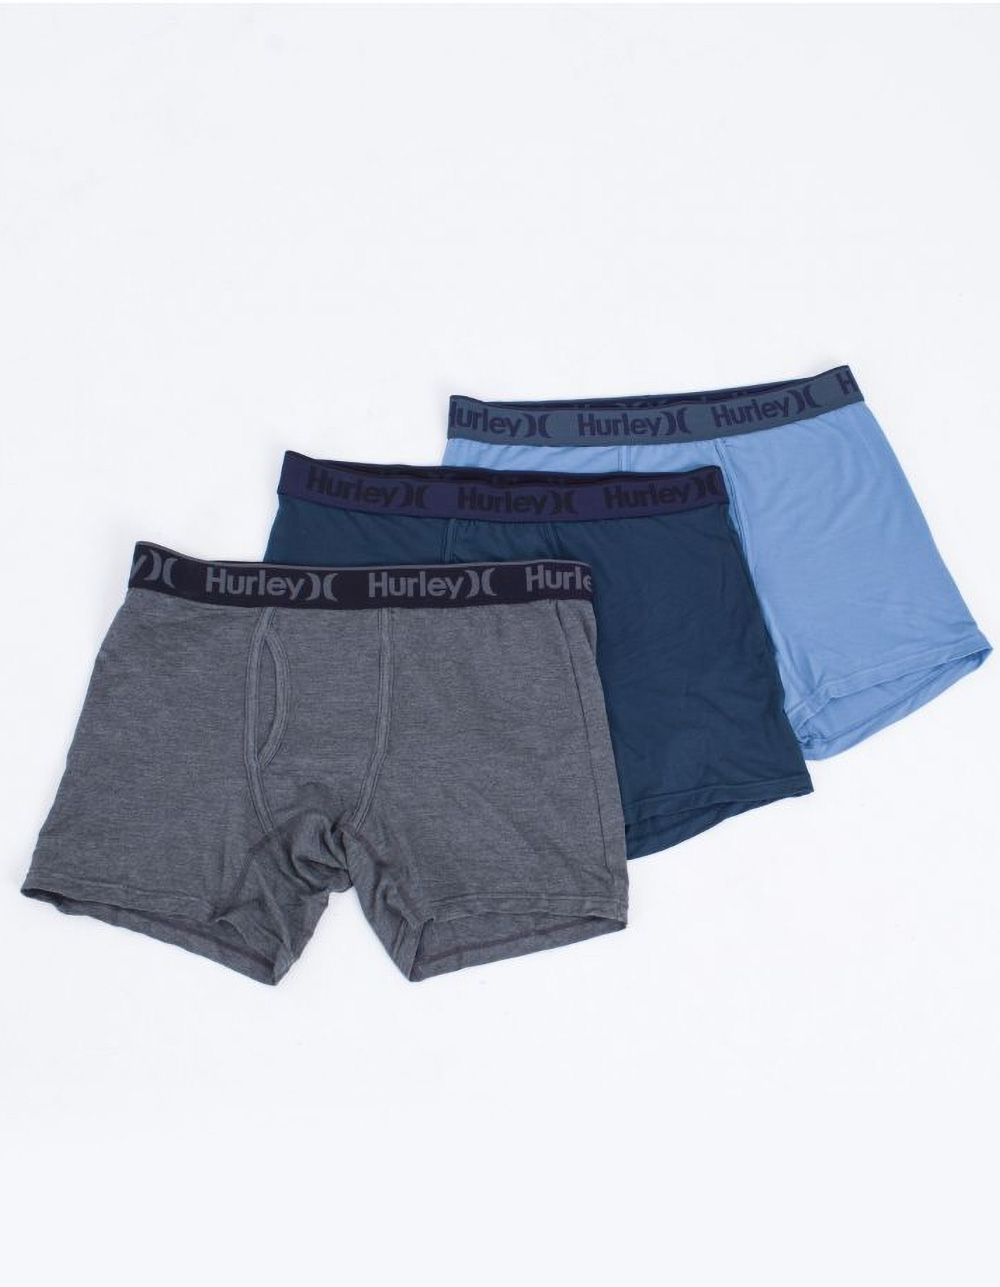 AVENGERS CAPTAIN AMERICA 3-Pack Boxer Briefs Underwear Boys Sz 4, 6, 8 or  10 $20